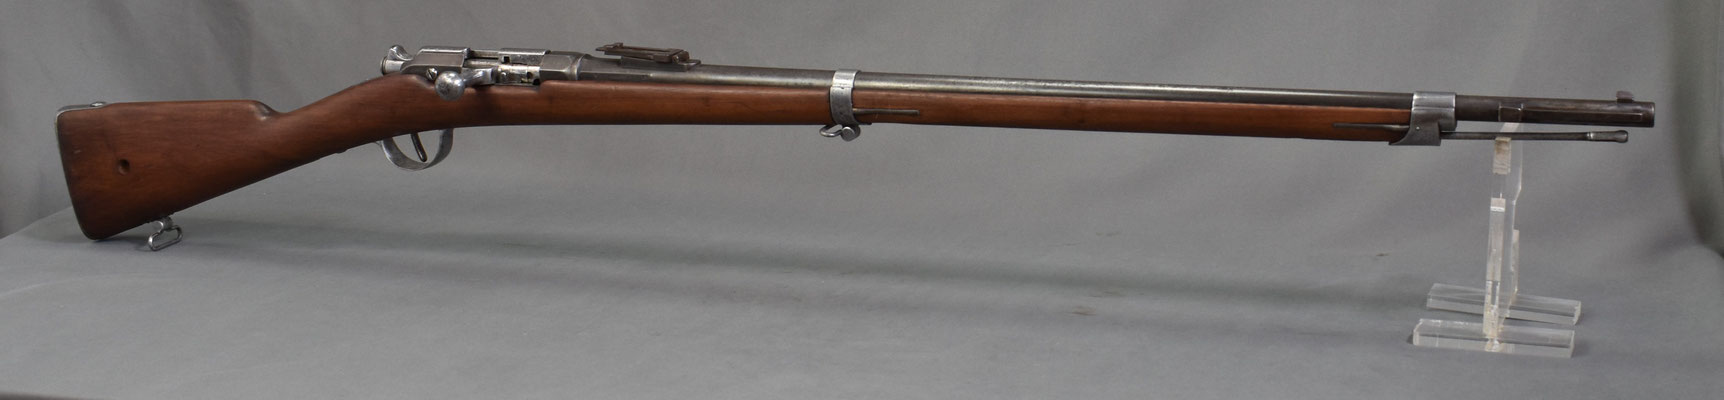 fusil gras mle 1874 M80